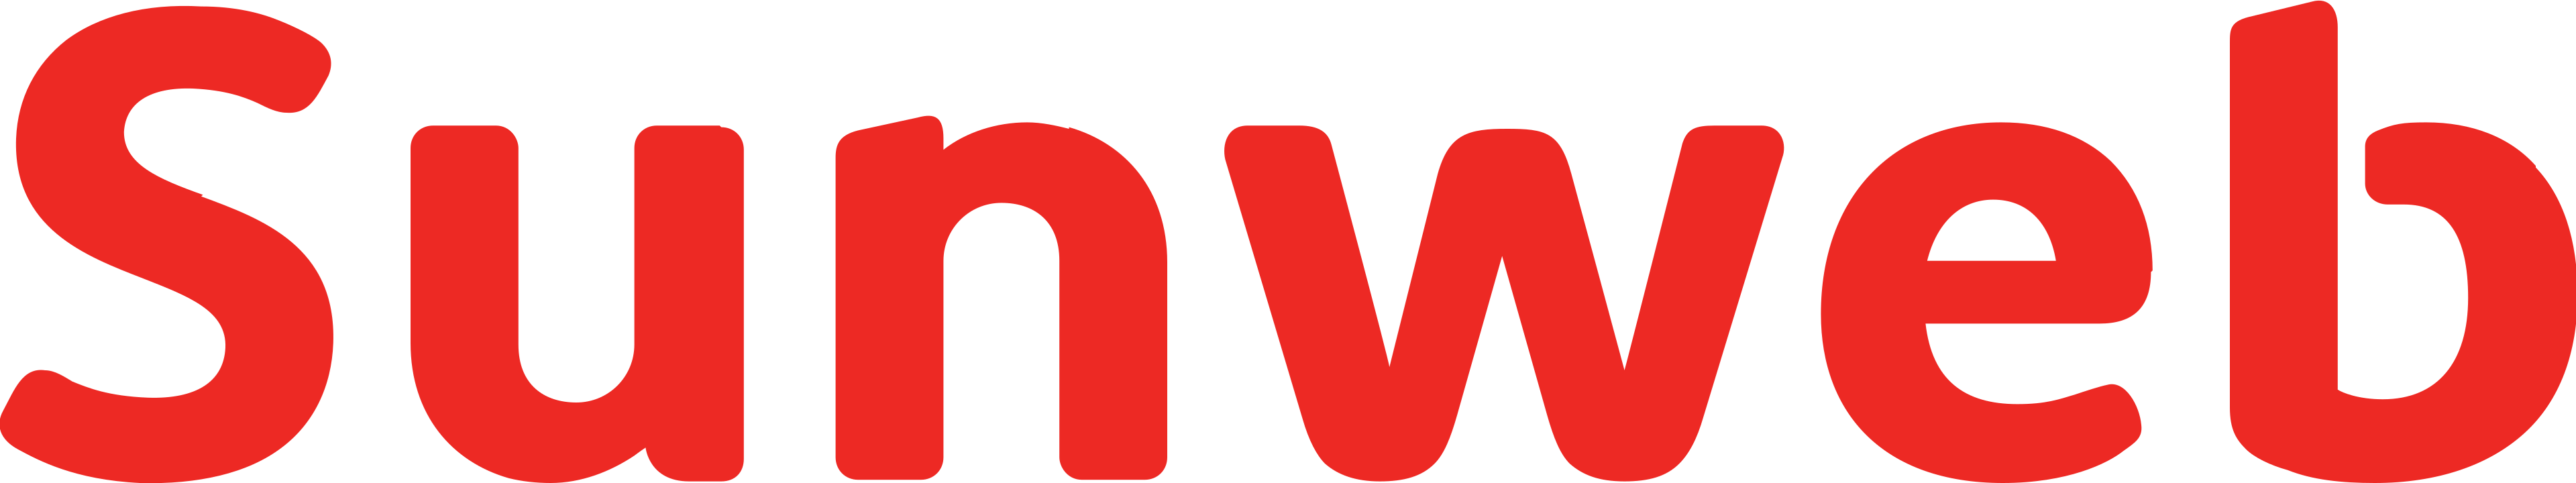 Sunweb Zomer logo